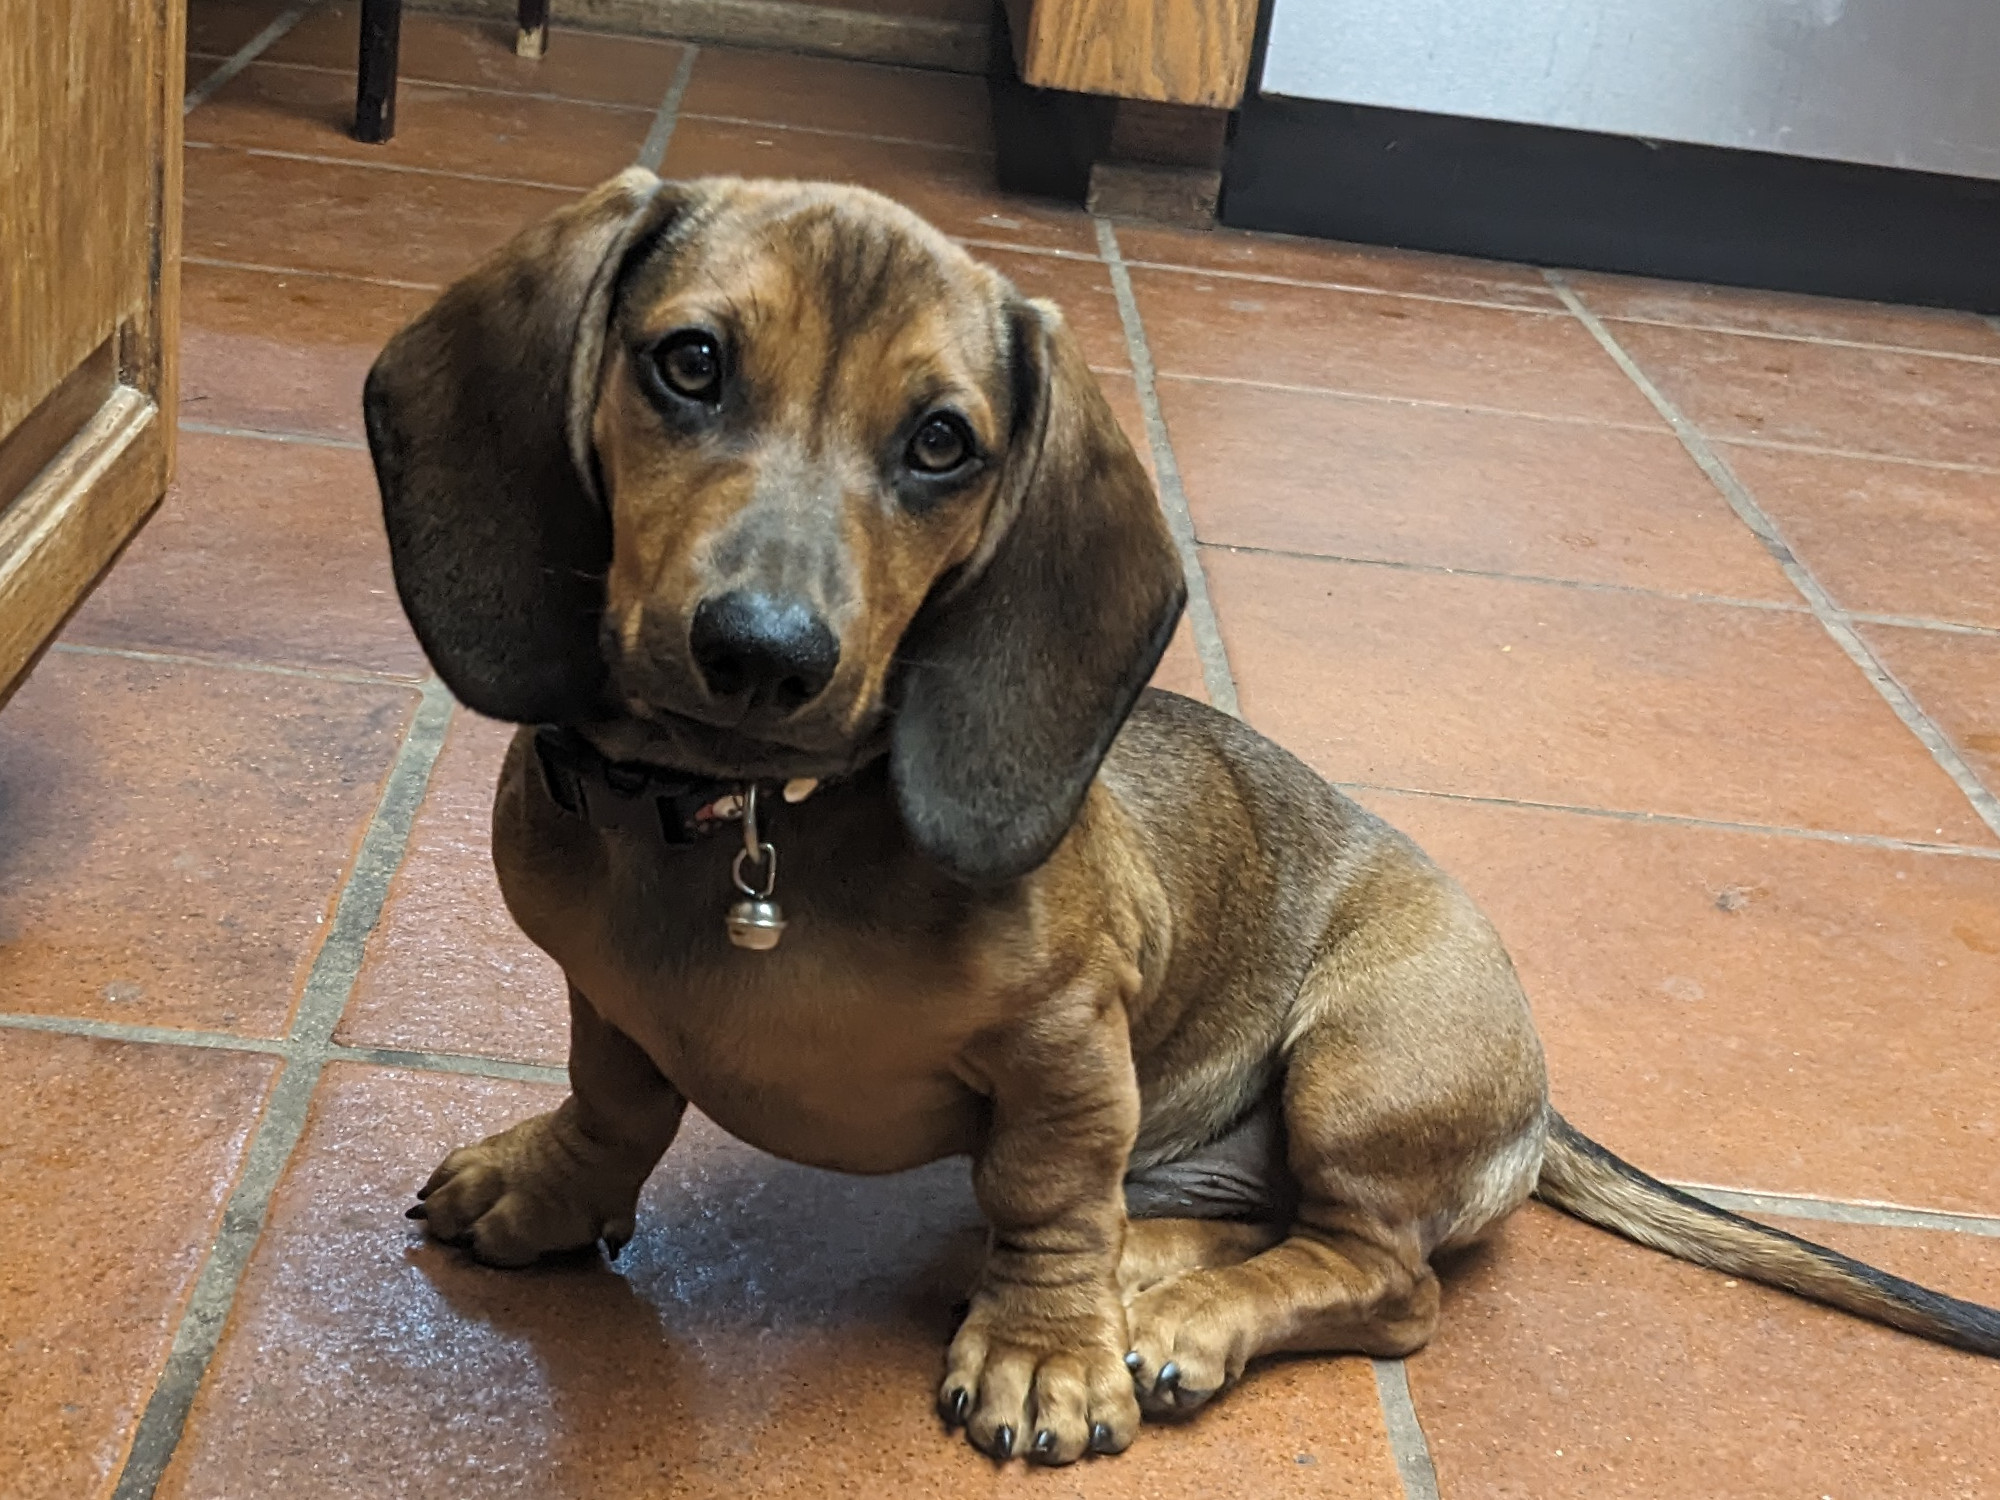 A dachshund puppy sitting on a tile floor